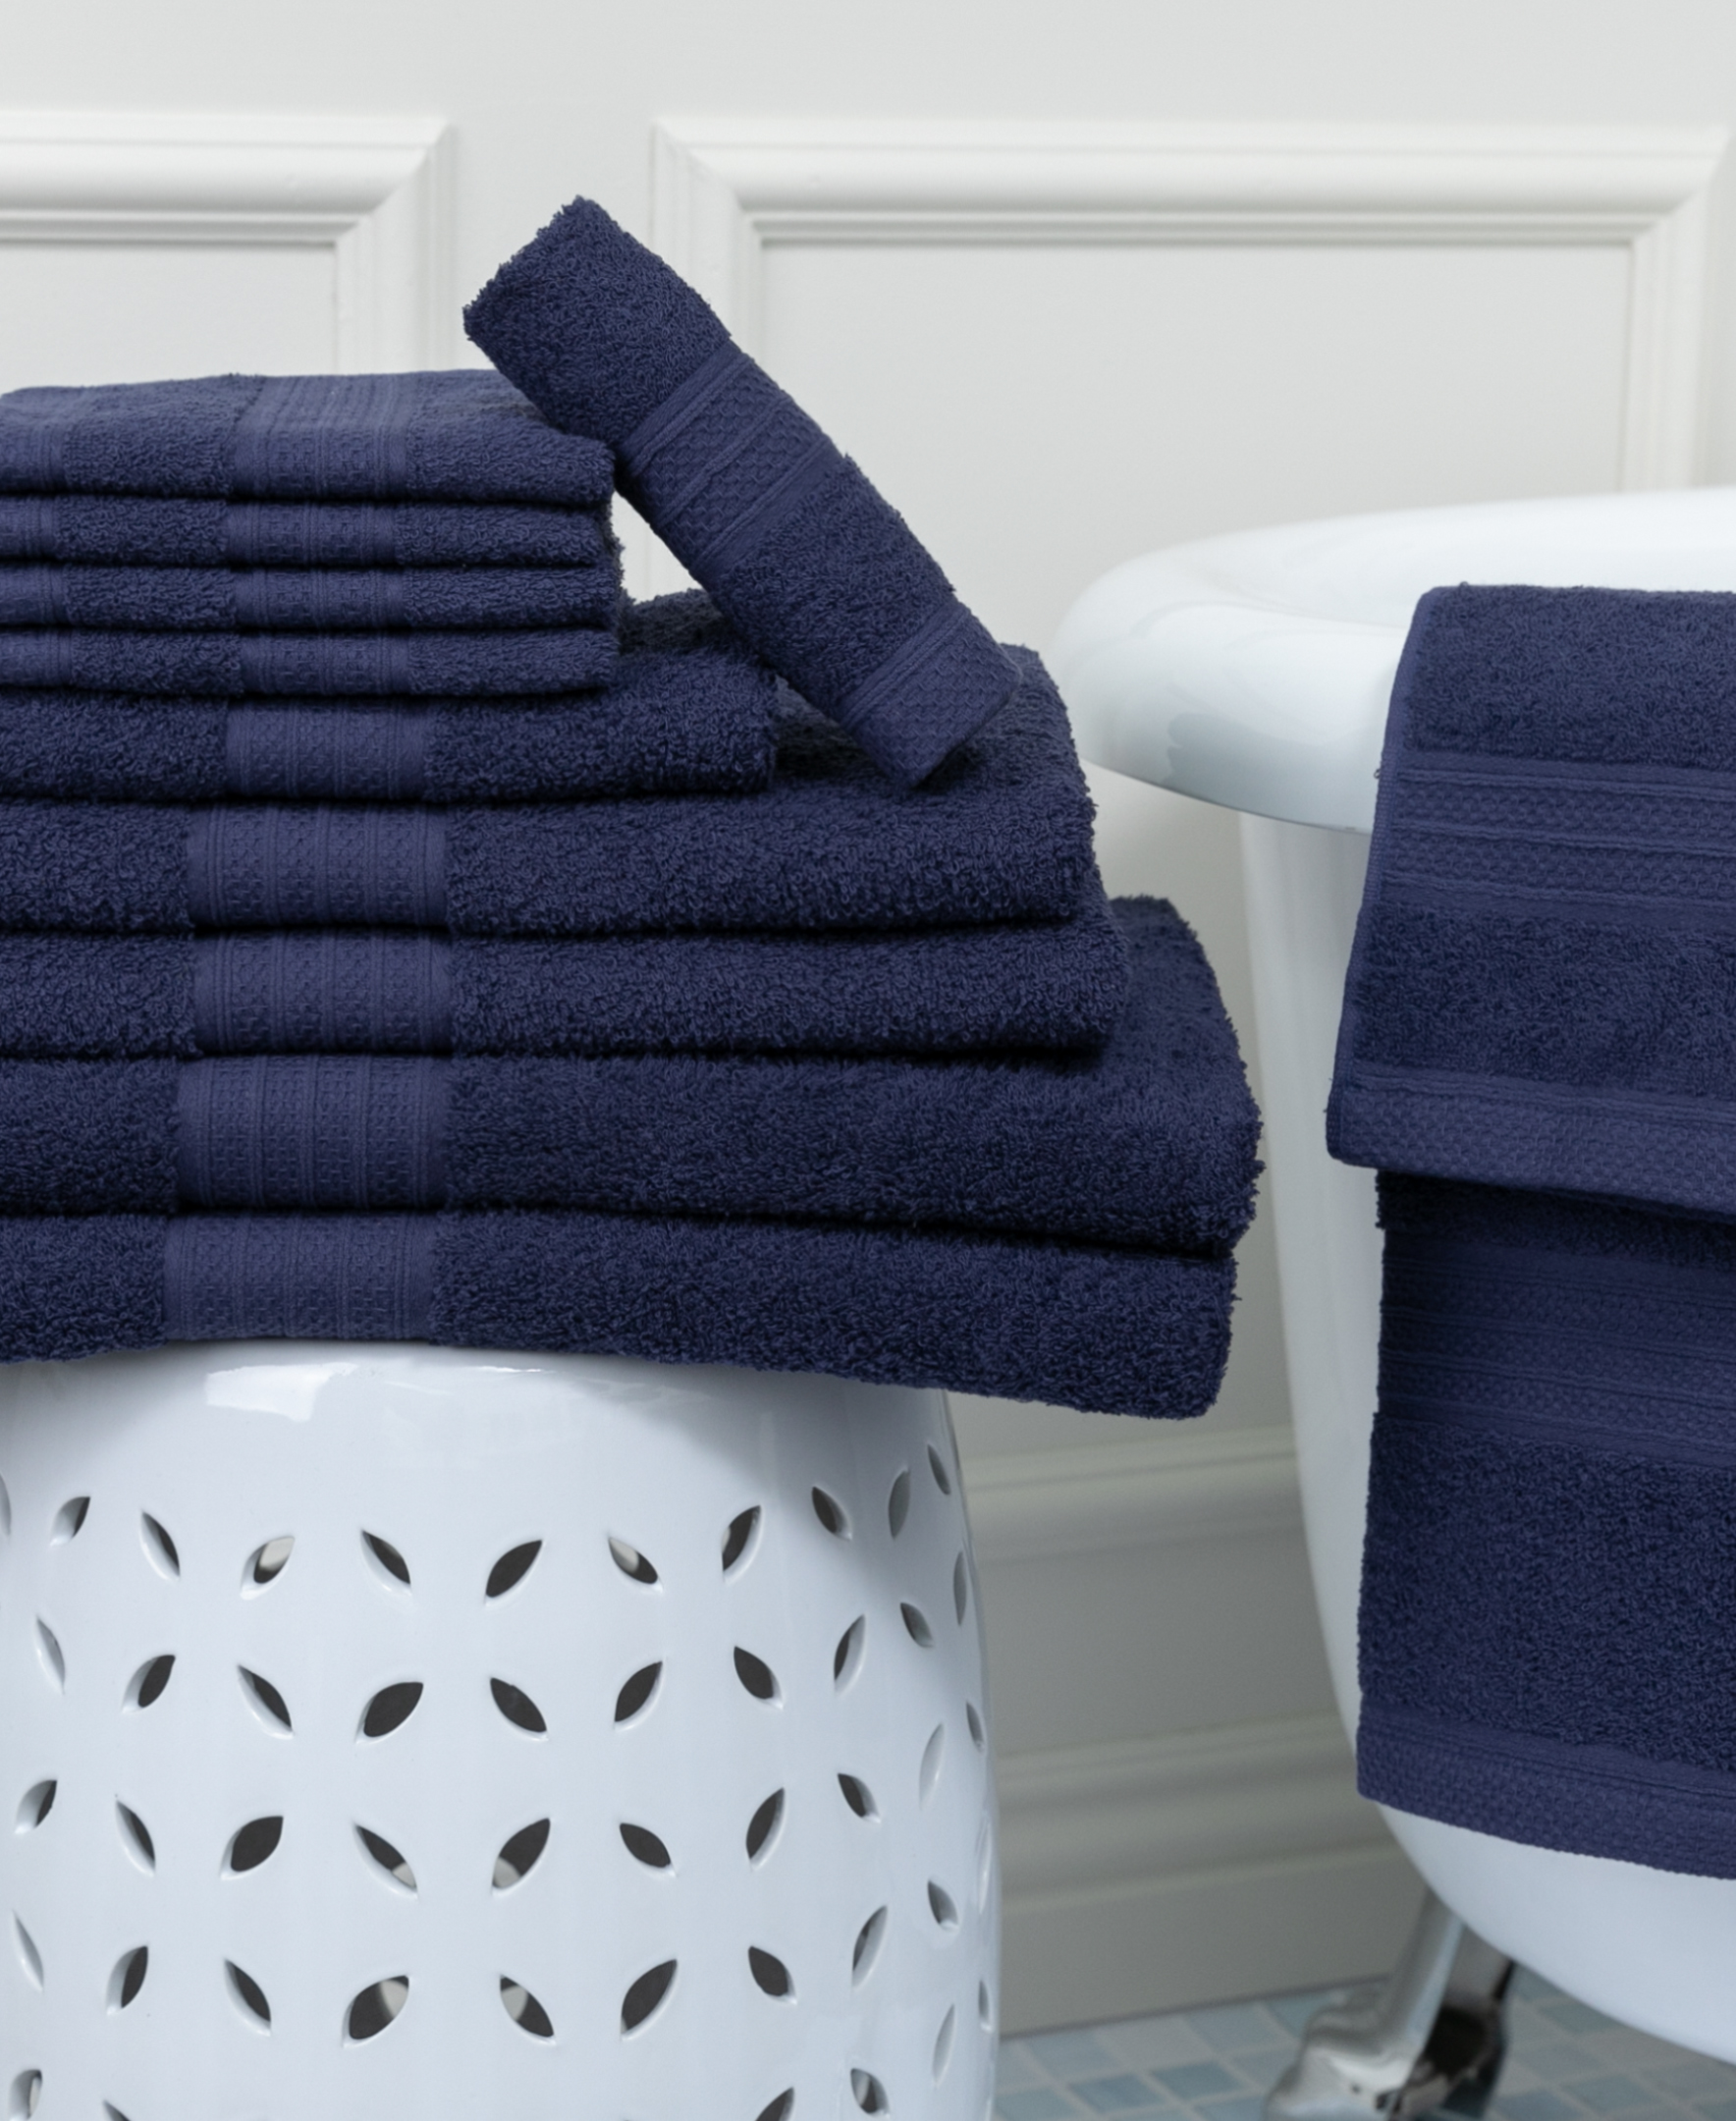 100-Percent Cotton Luxury 12-Piece Towel Set - image 2 of 3